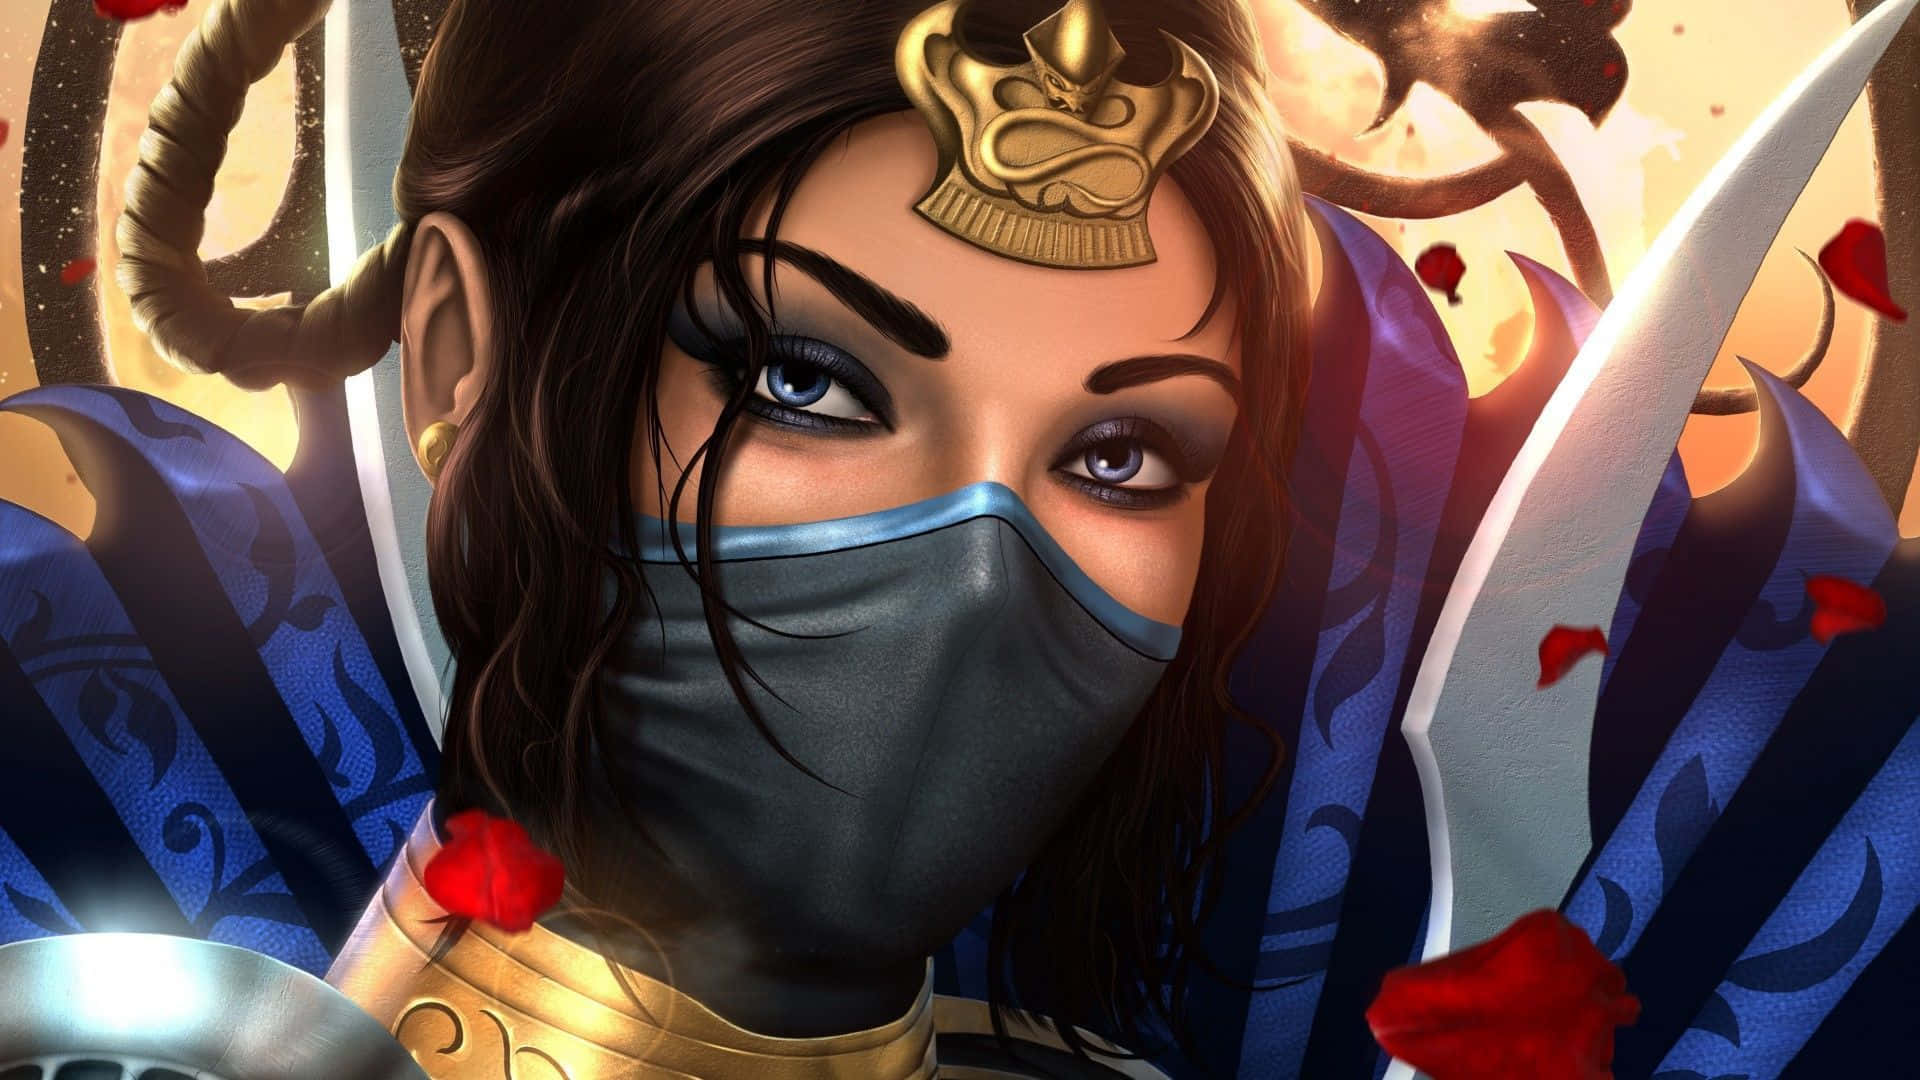 Kitana - The Blue Warrior in Mortal Kombat Wallpaper